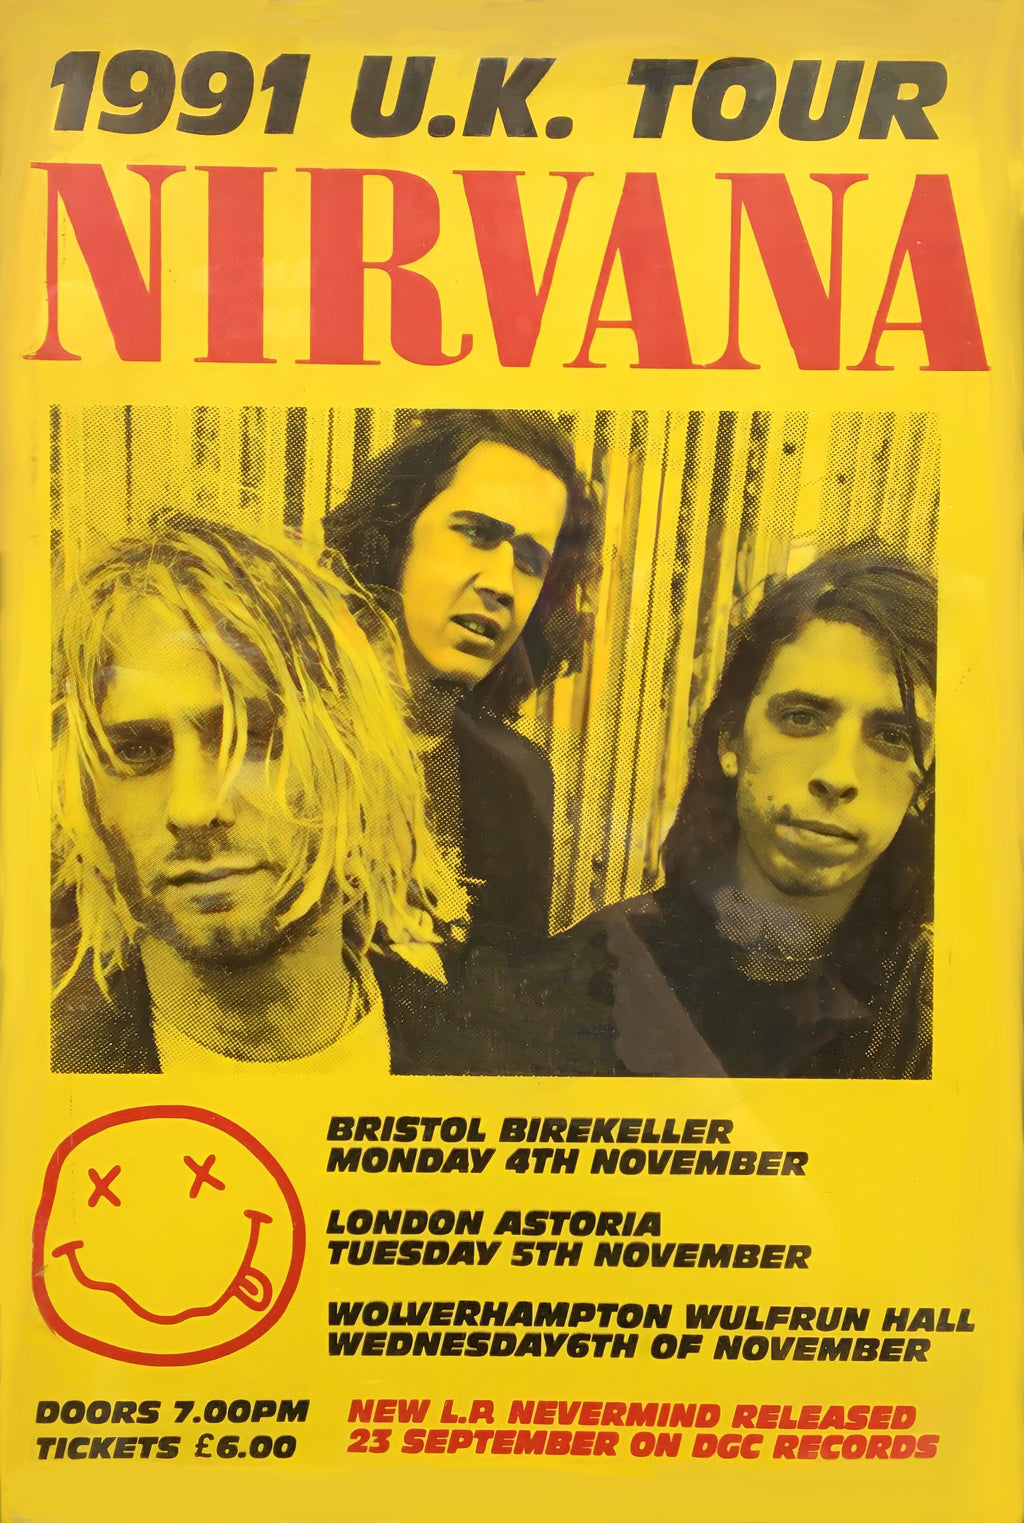 Nirvana 1991 UK Tour Vintage Music Art Poster 0930